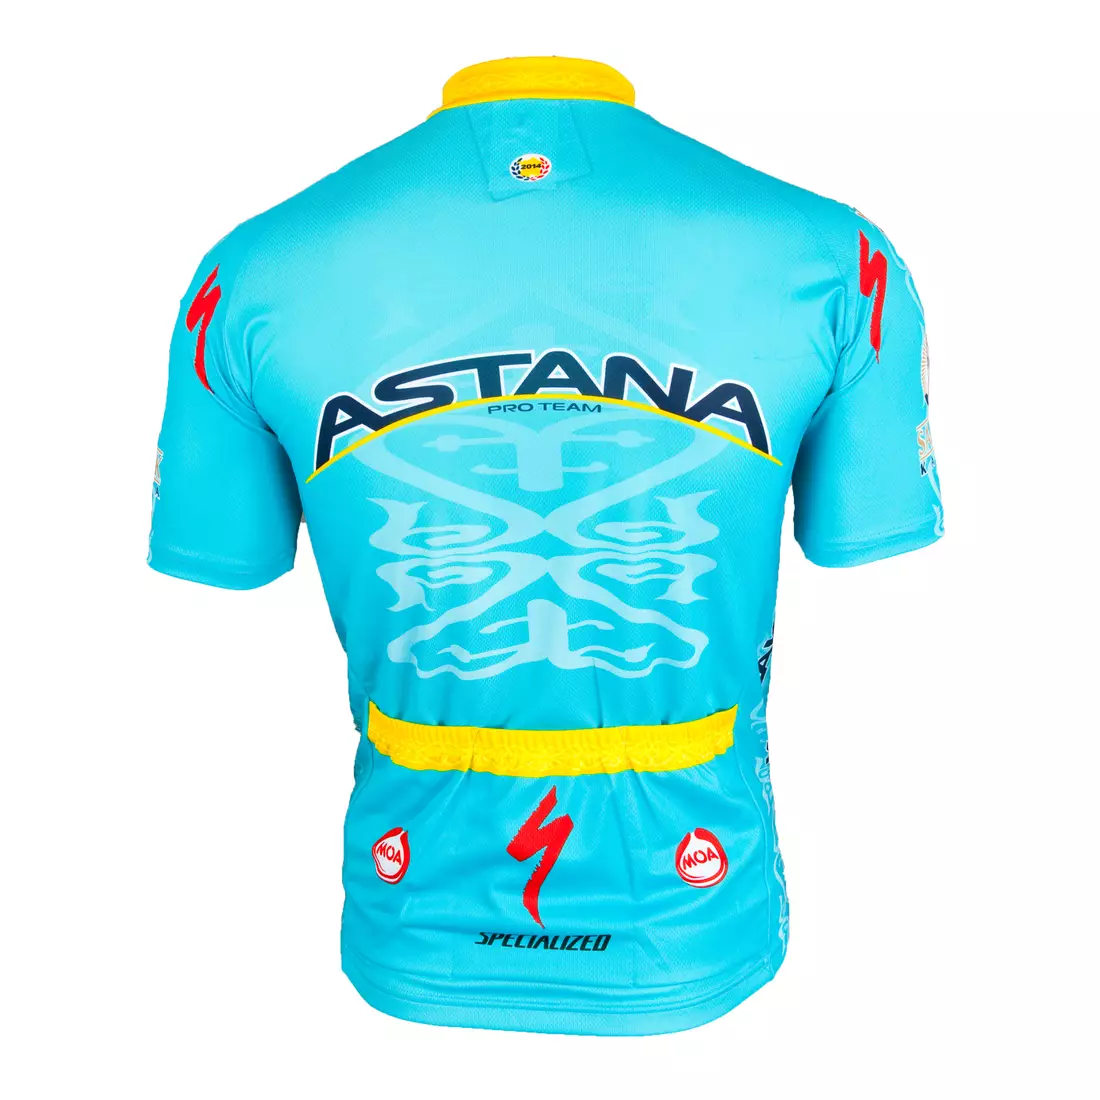 ASTANA 2015 cycling jersey